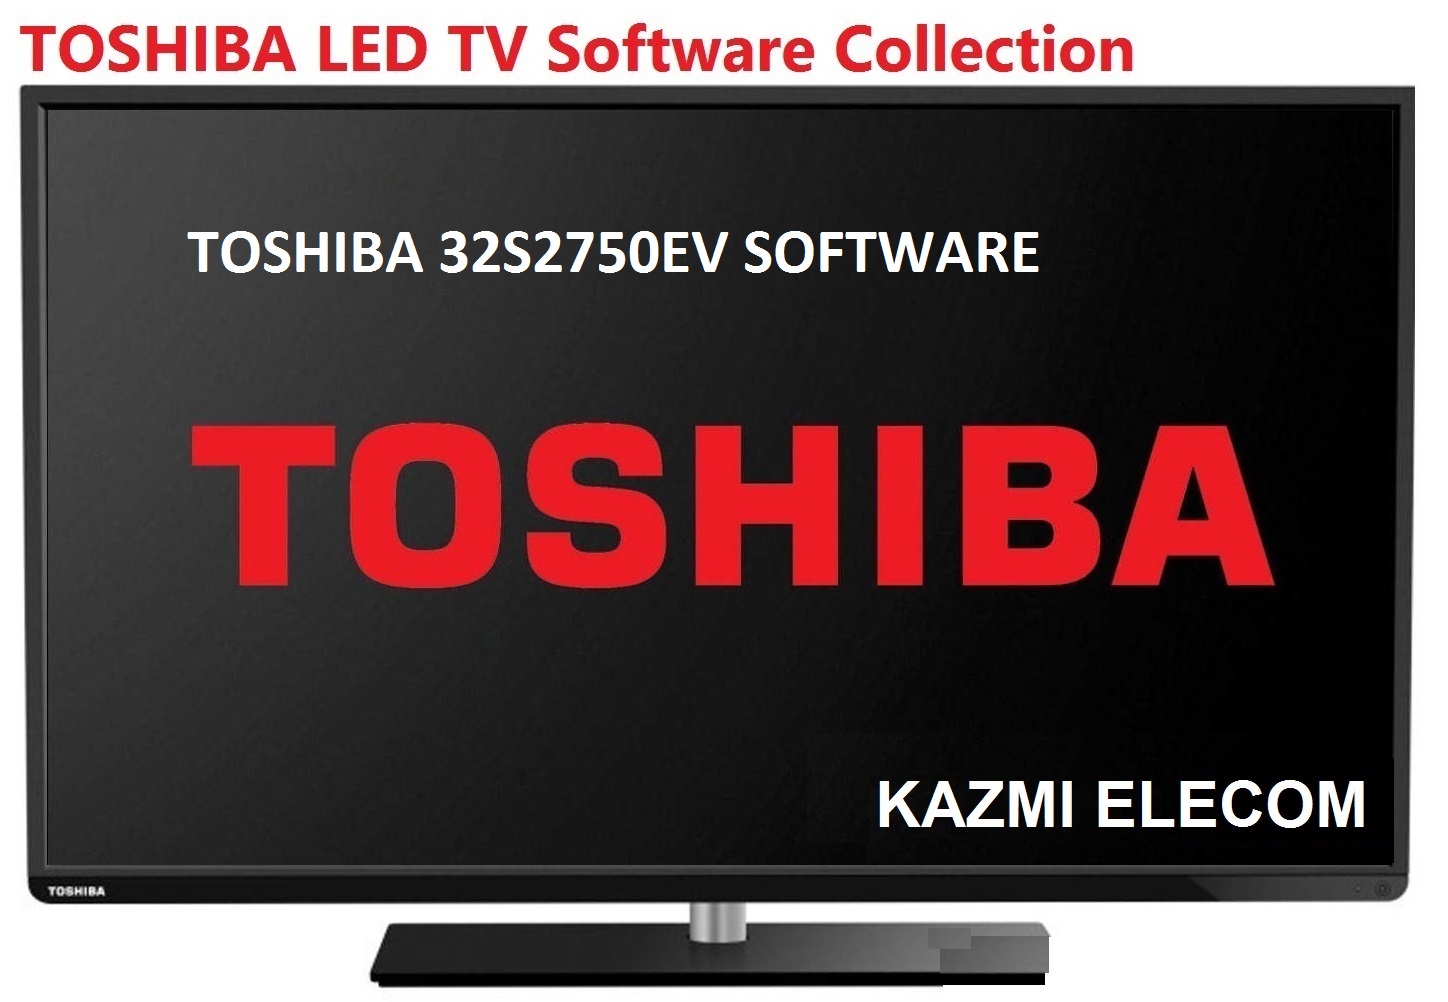 Toshiba 32S2750Ev